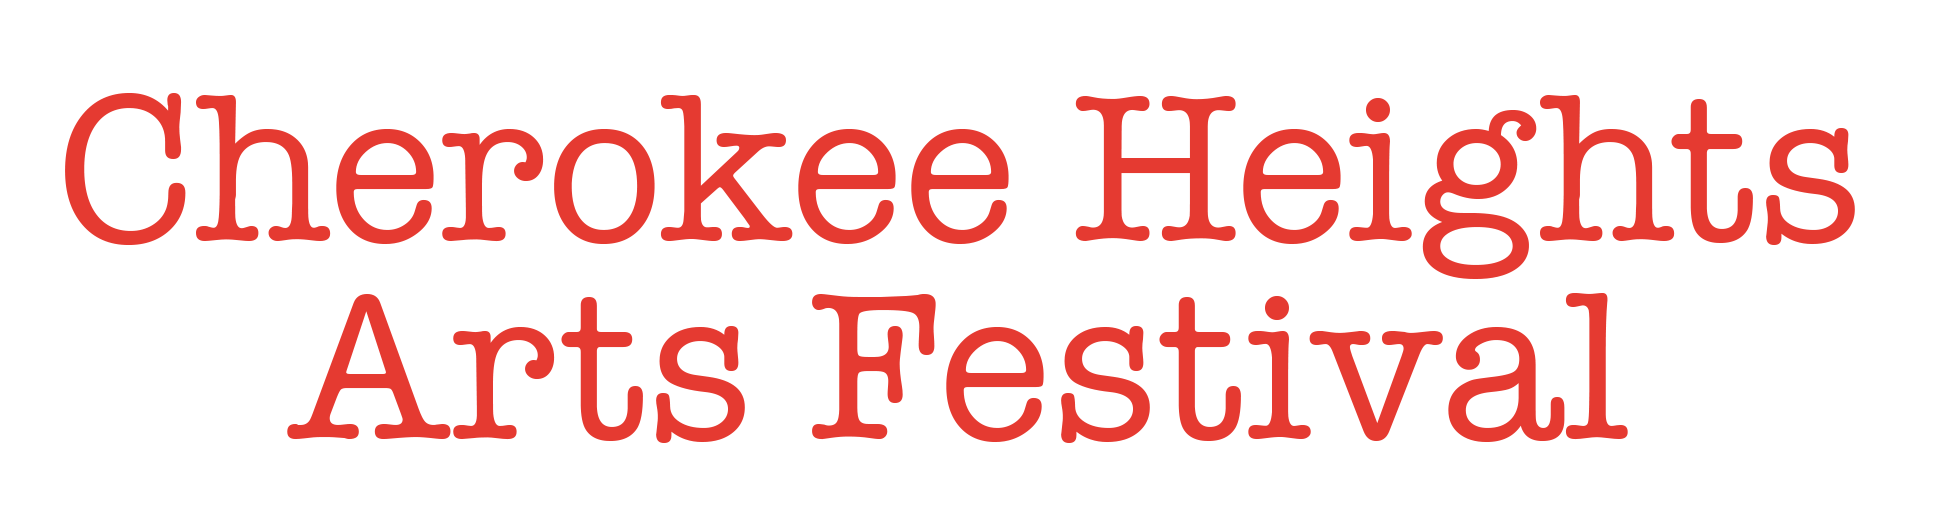 2019 Cherokee Heights Arts Festival